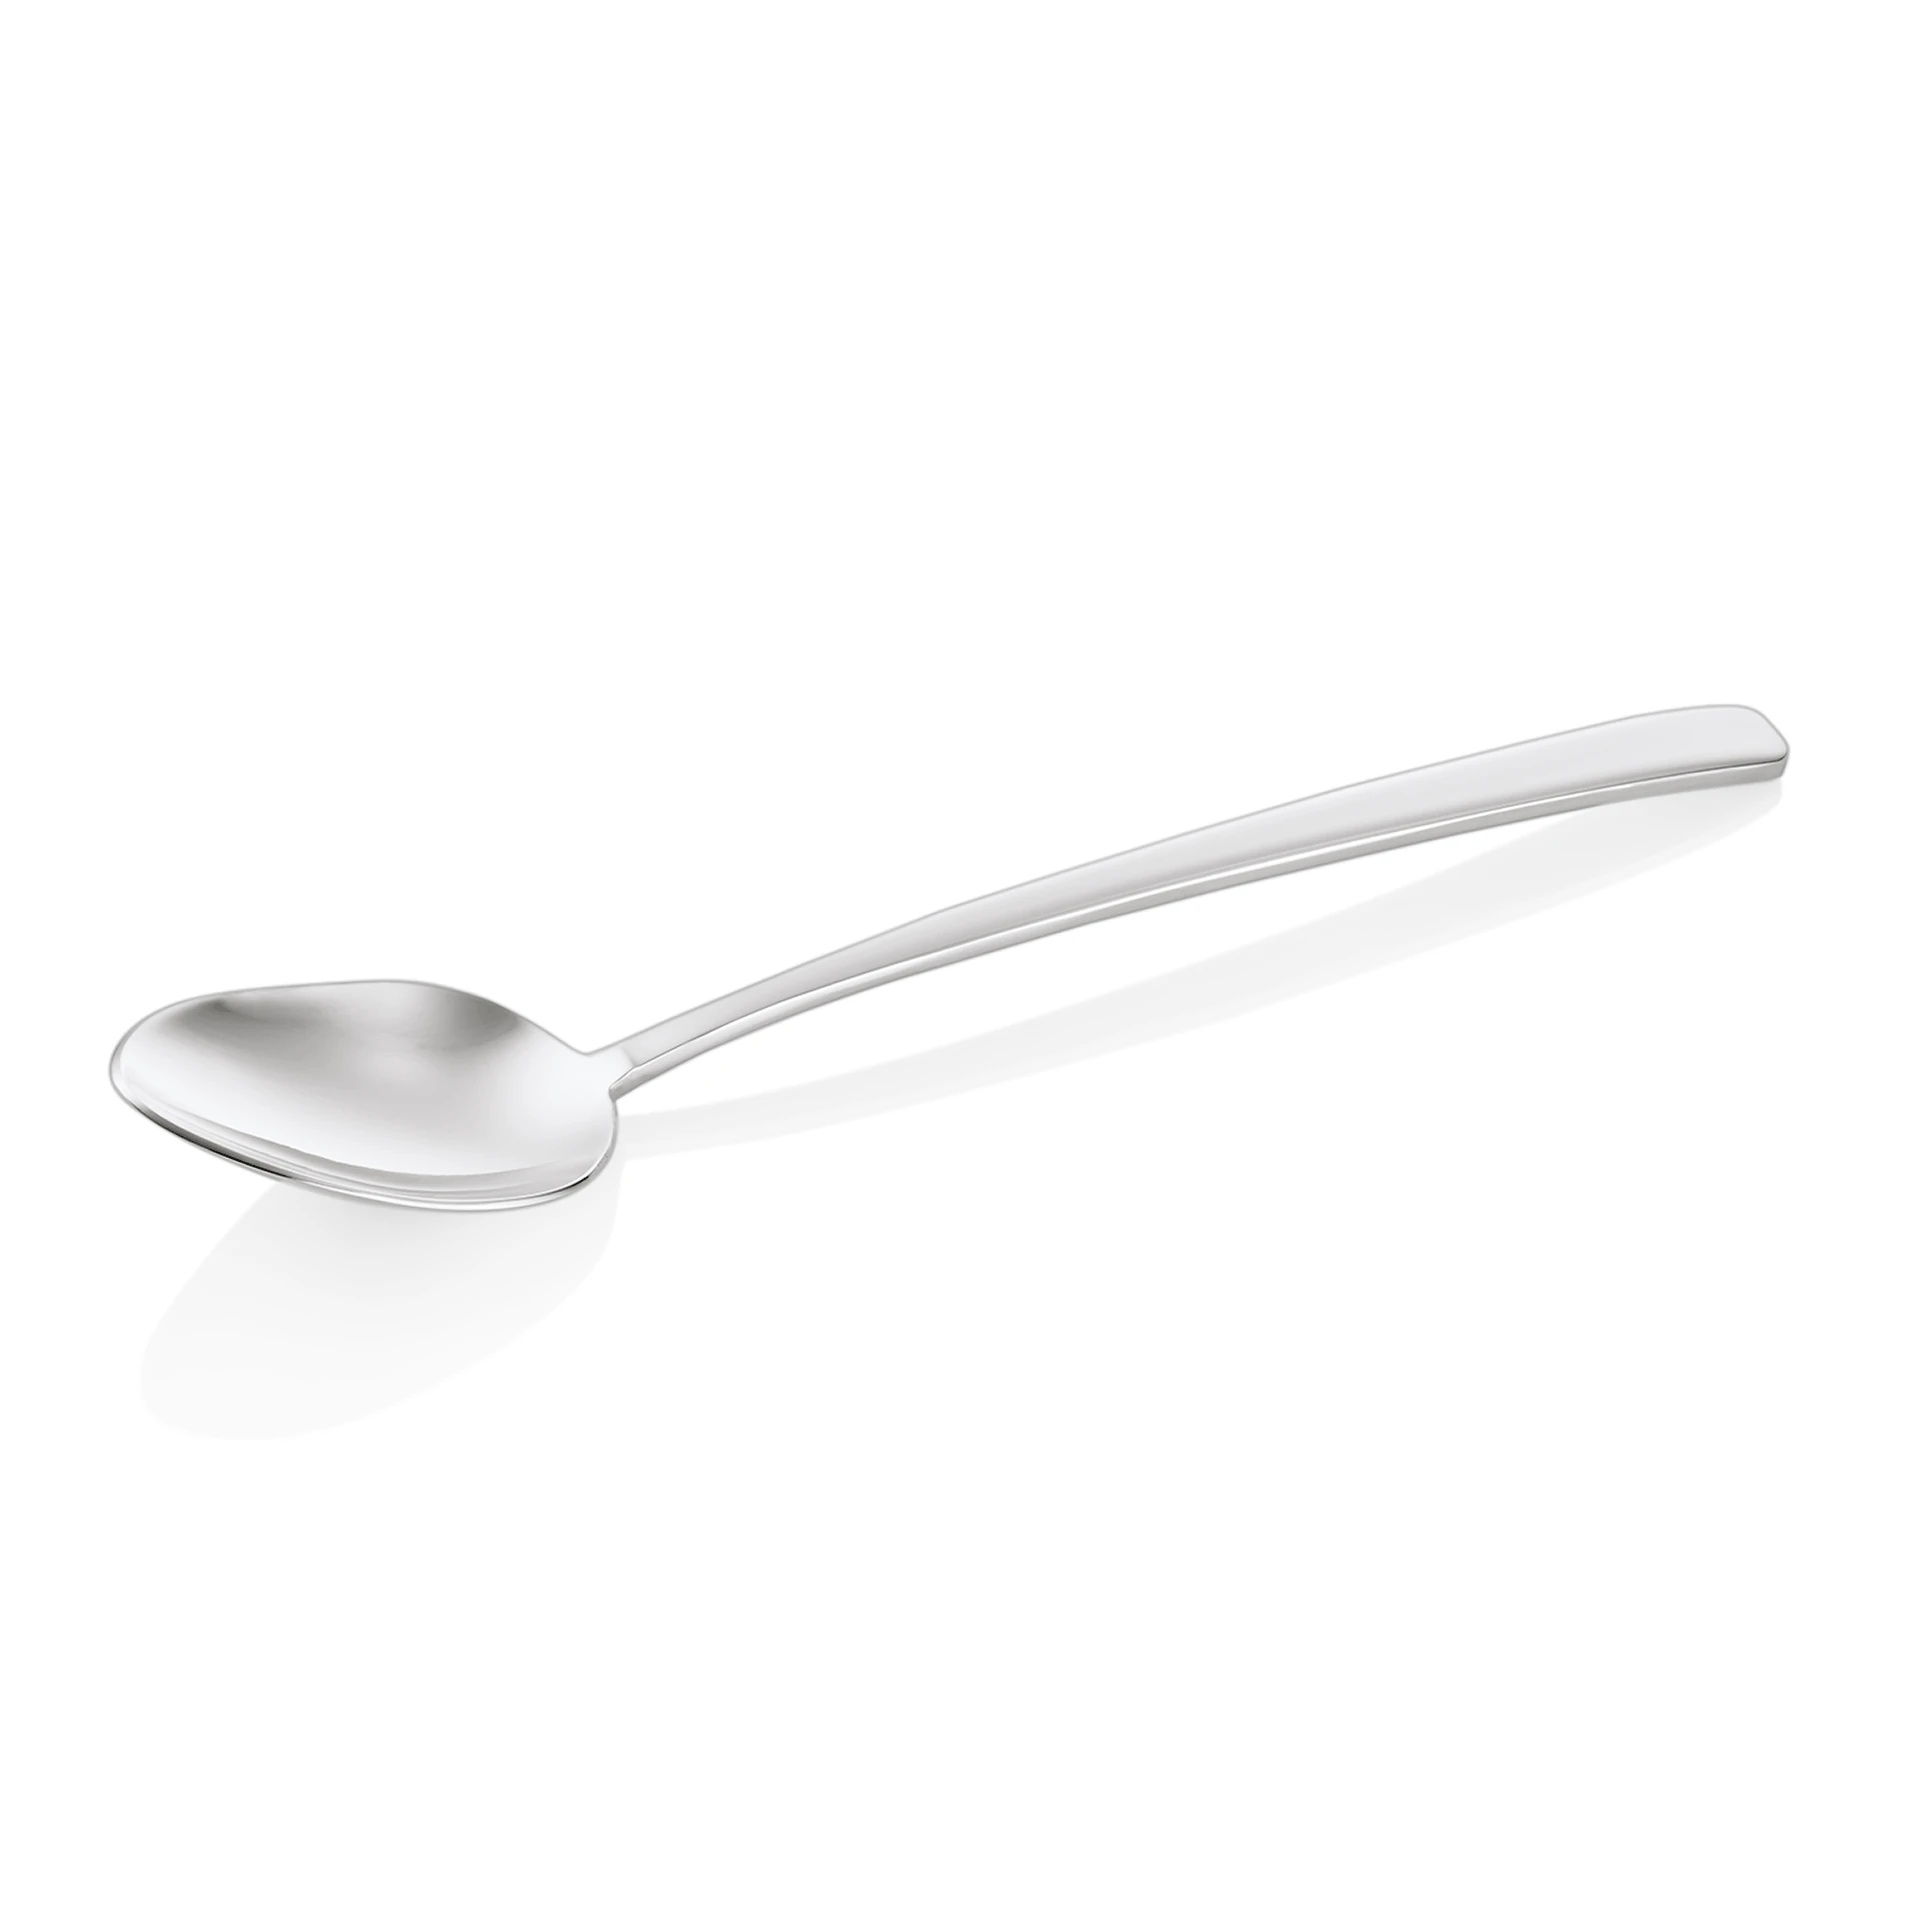 Dinner spoon Ovora